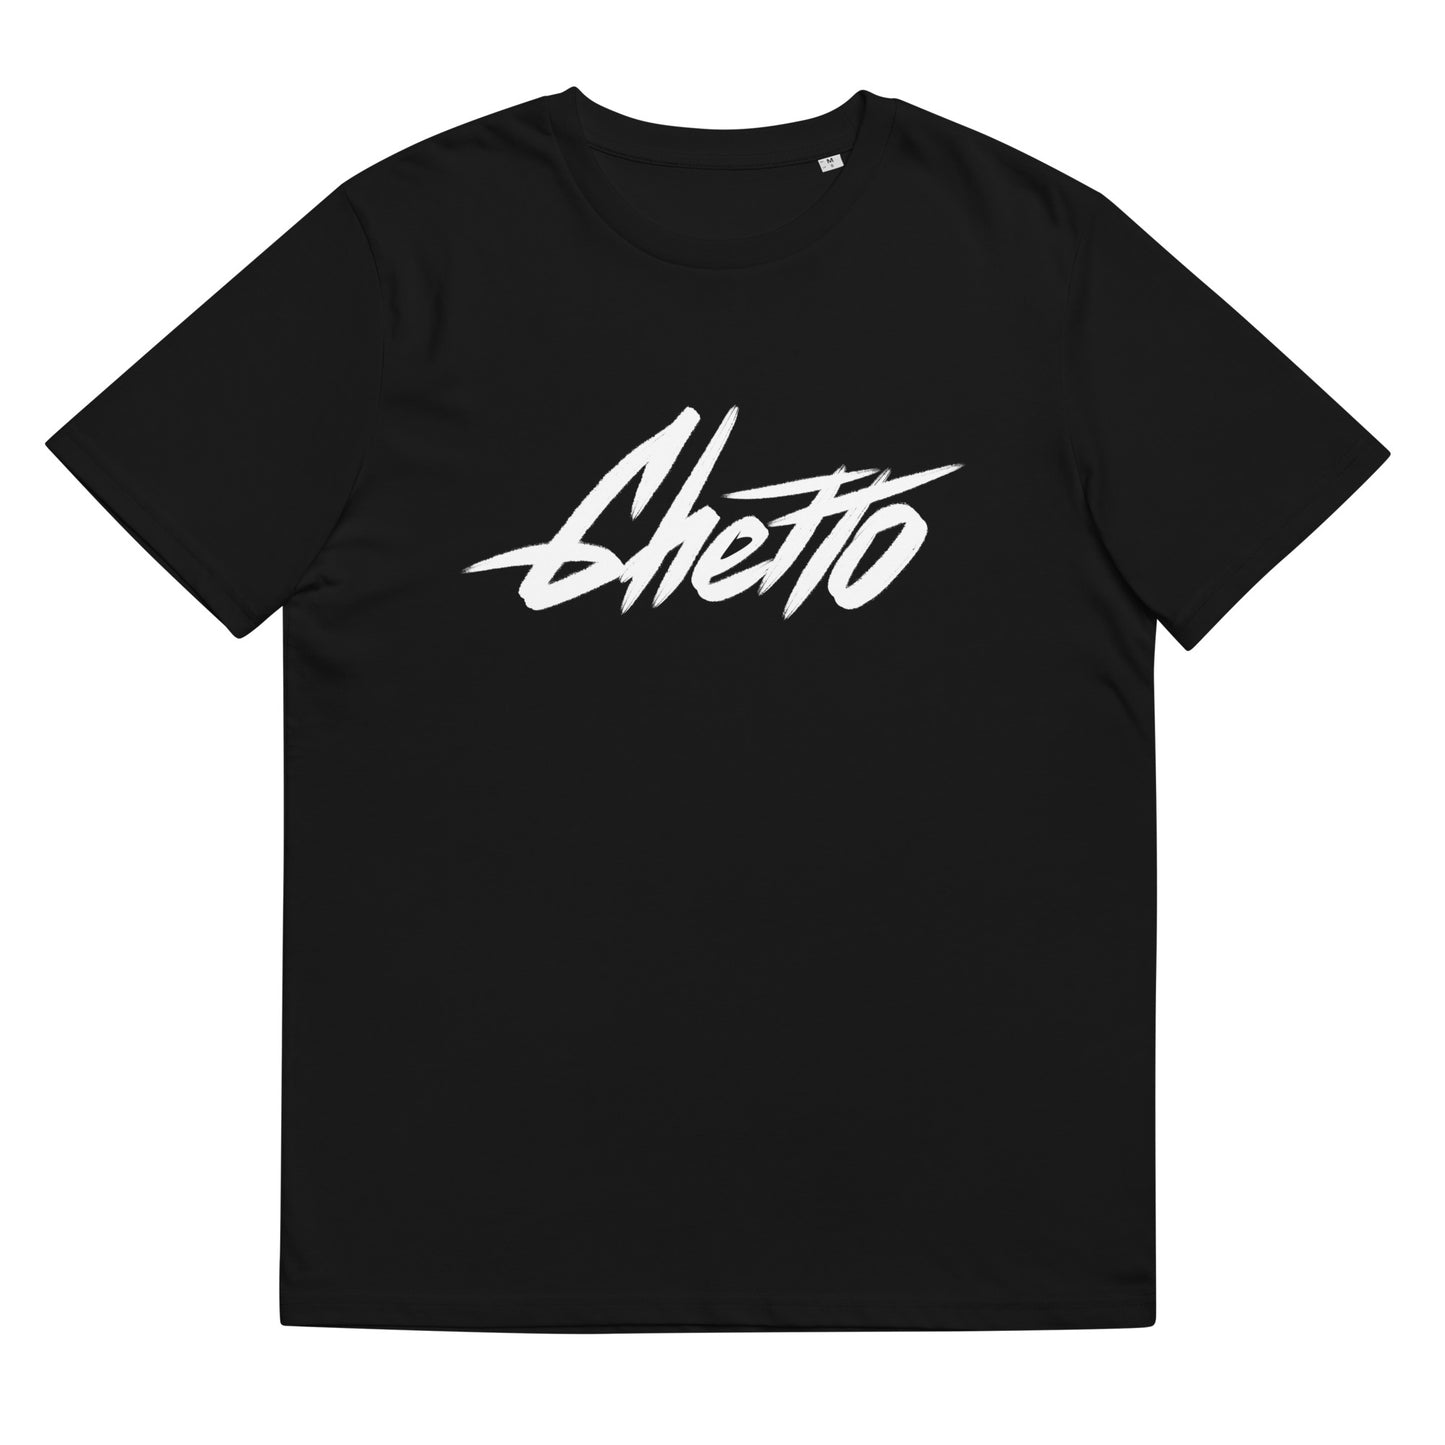 Black Ghetto t-shirt